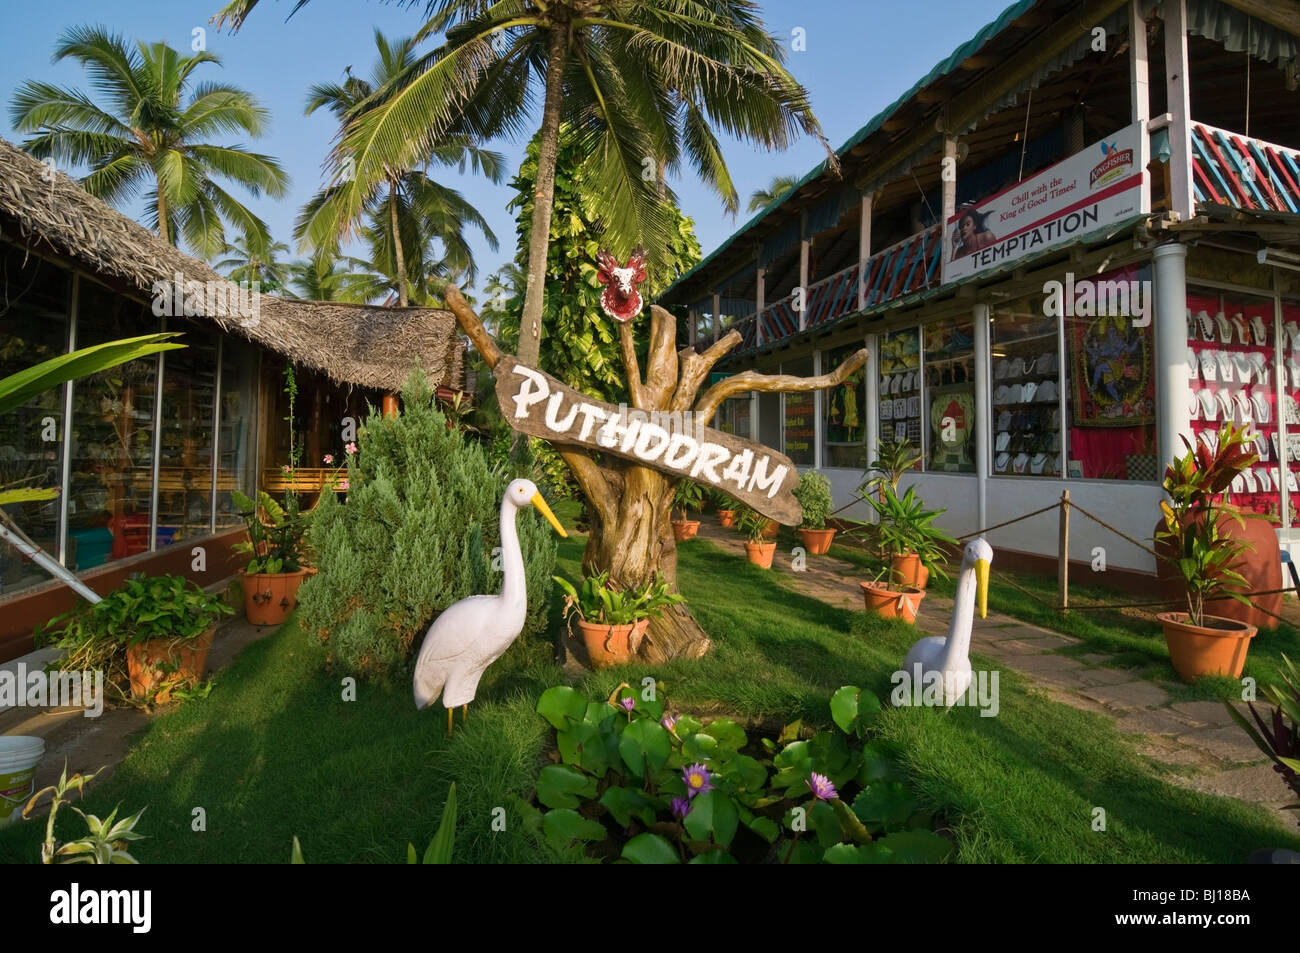 Puthooram ayurvedic beach resort hotel sign Varkala Kerala India Stock Photo